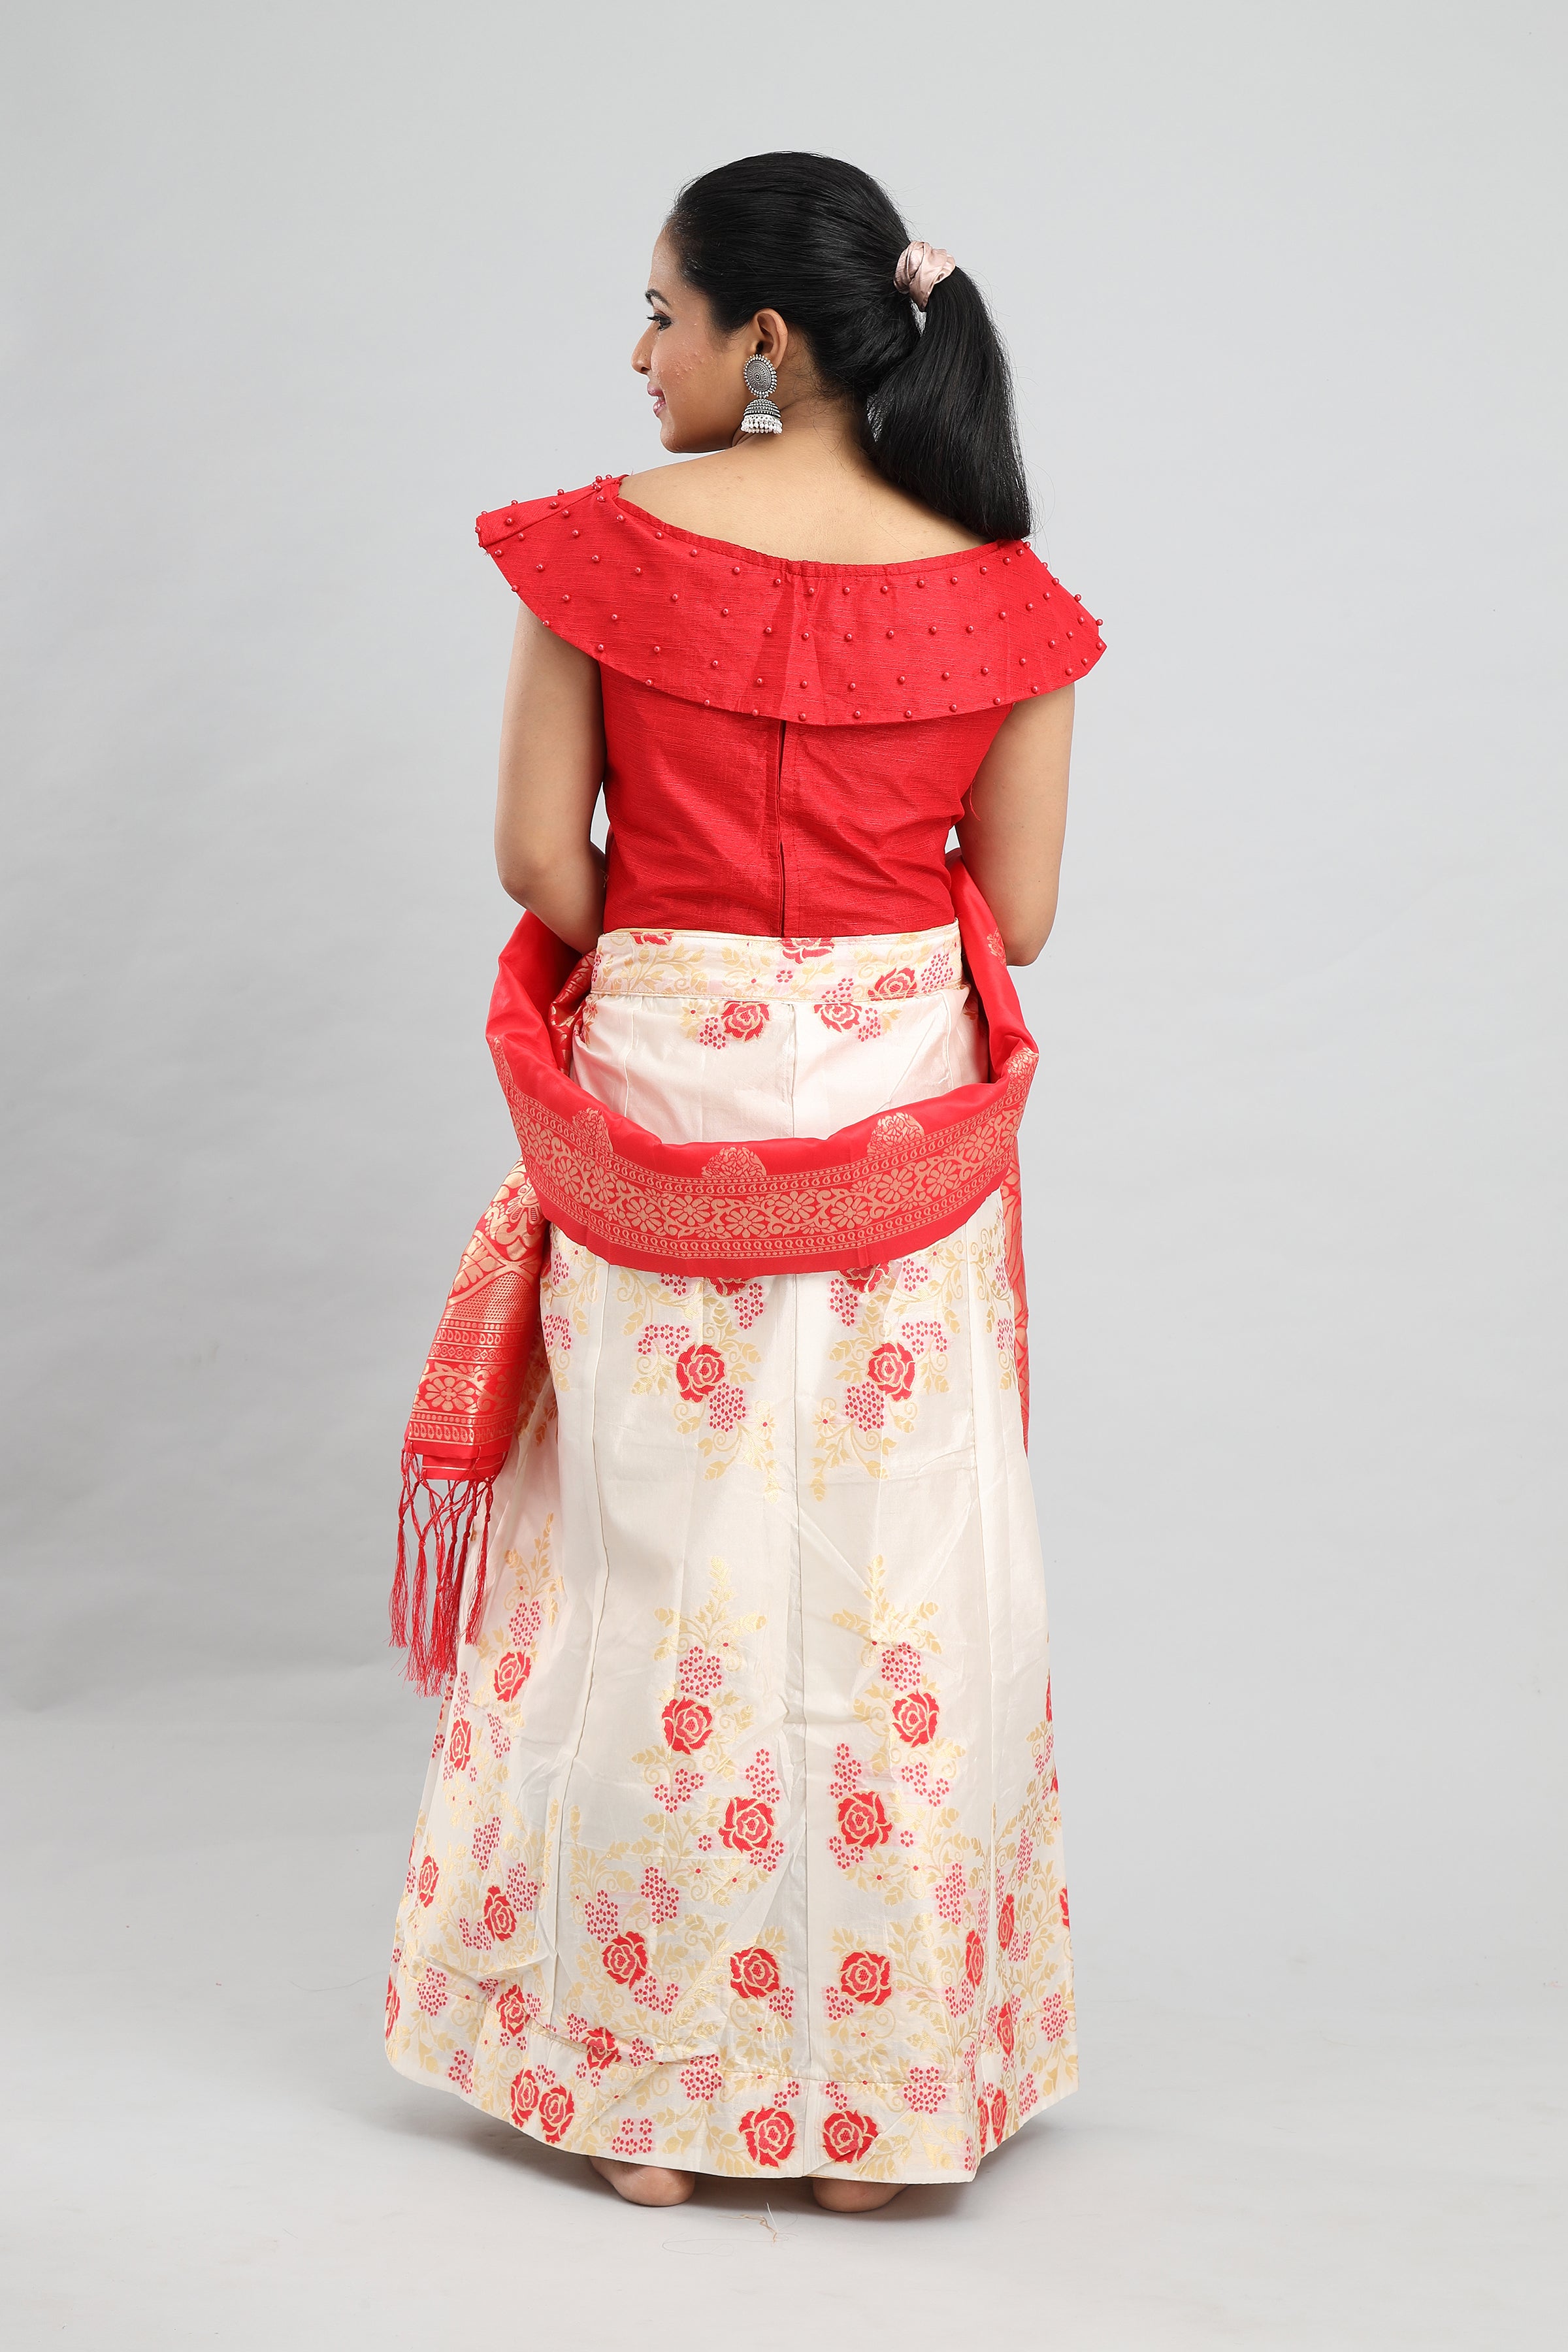 Women's Banarasi Red Floral Brocade Lehenga With Ready Made Blouse, Dupatta, Cane And Lining. - MANOHARA